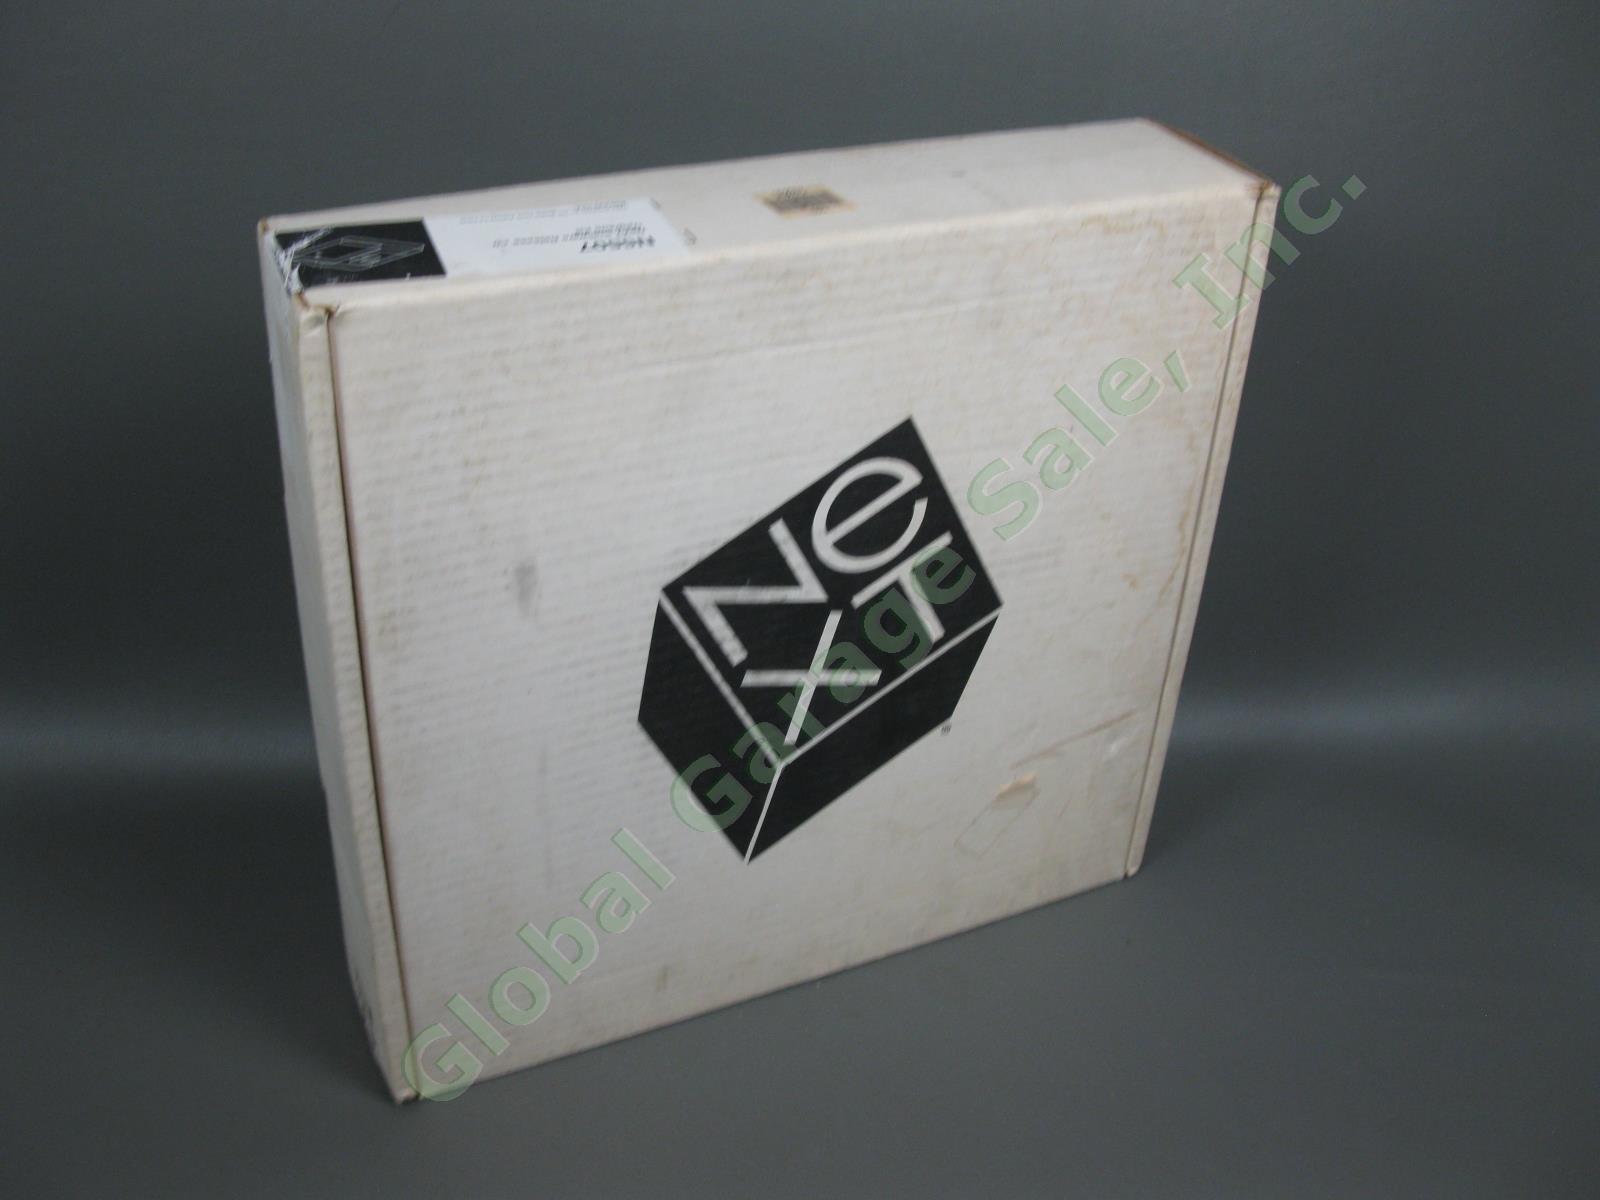 Vintage Next Cube Computer System Software Release 2.0 Upgrade Kit Jobs Apple NR 9